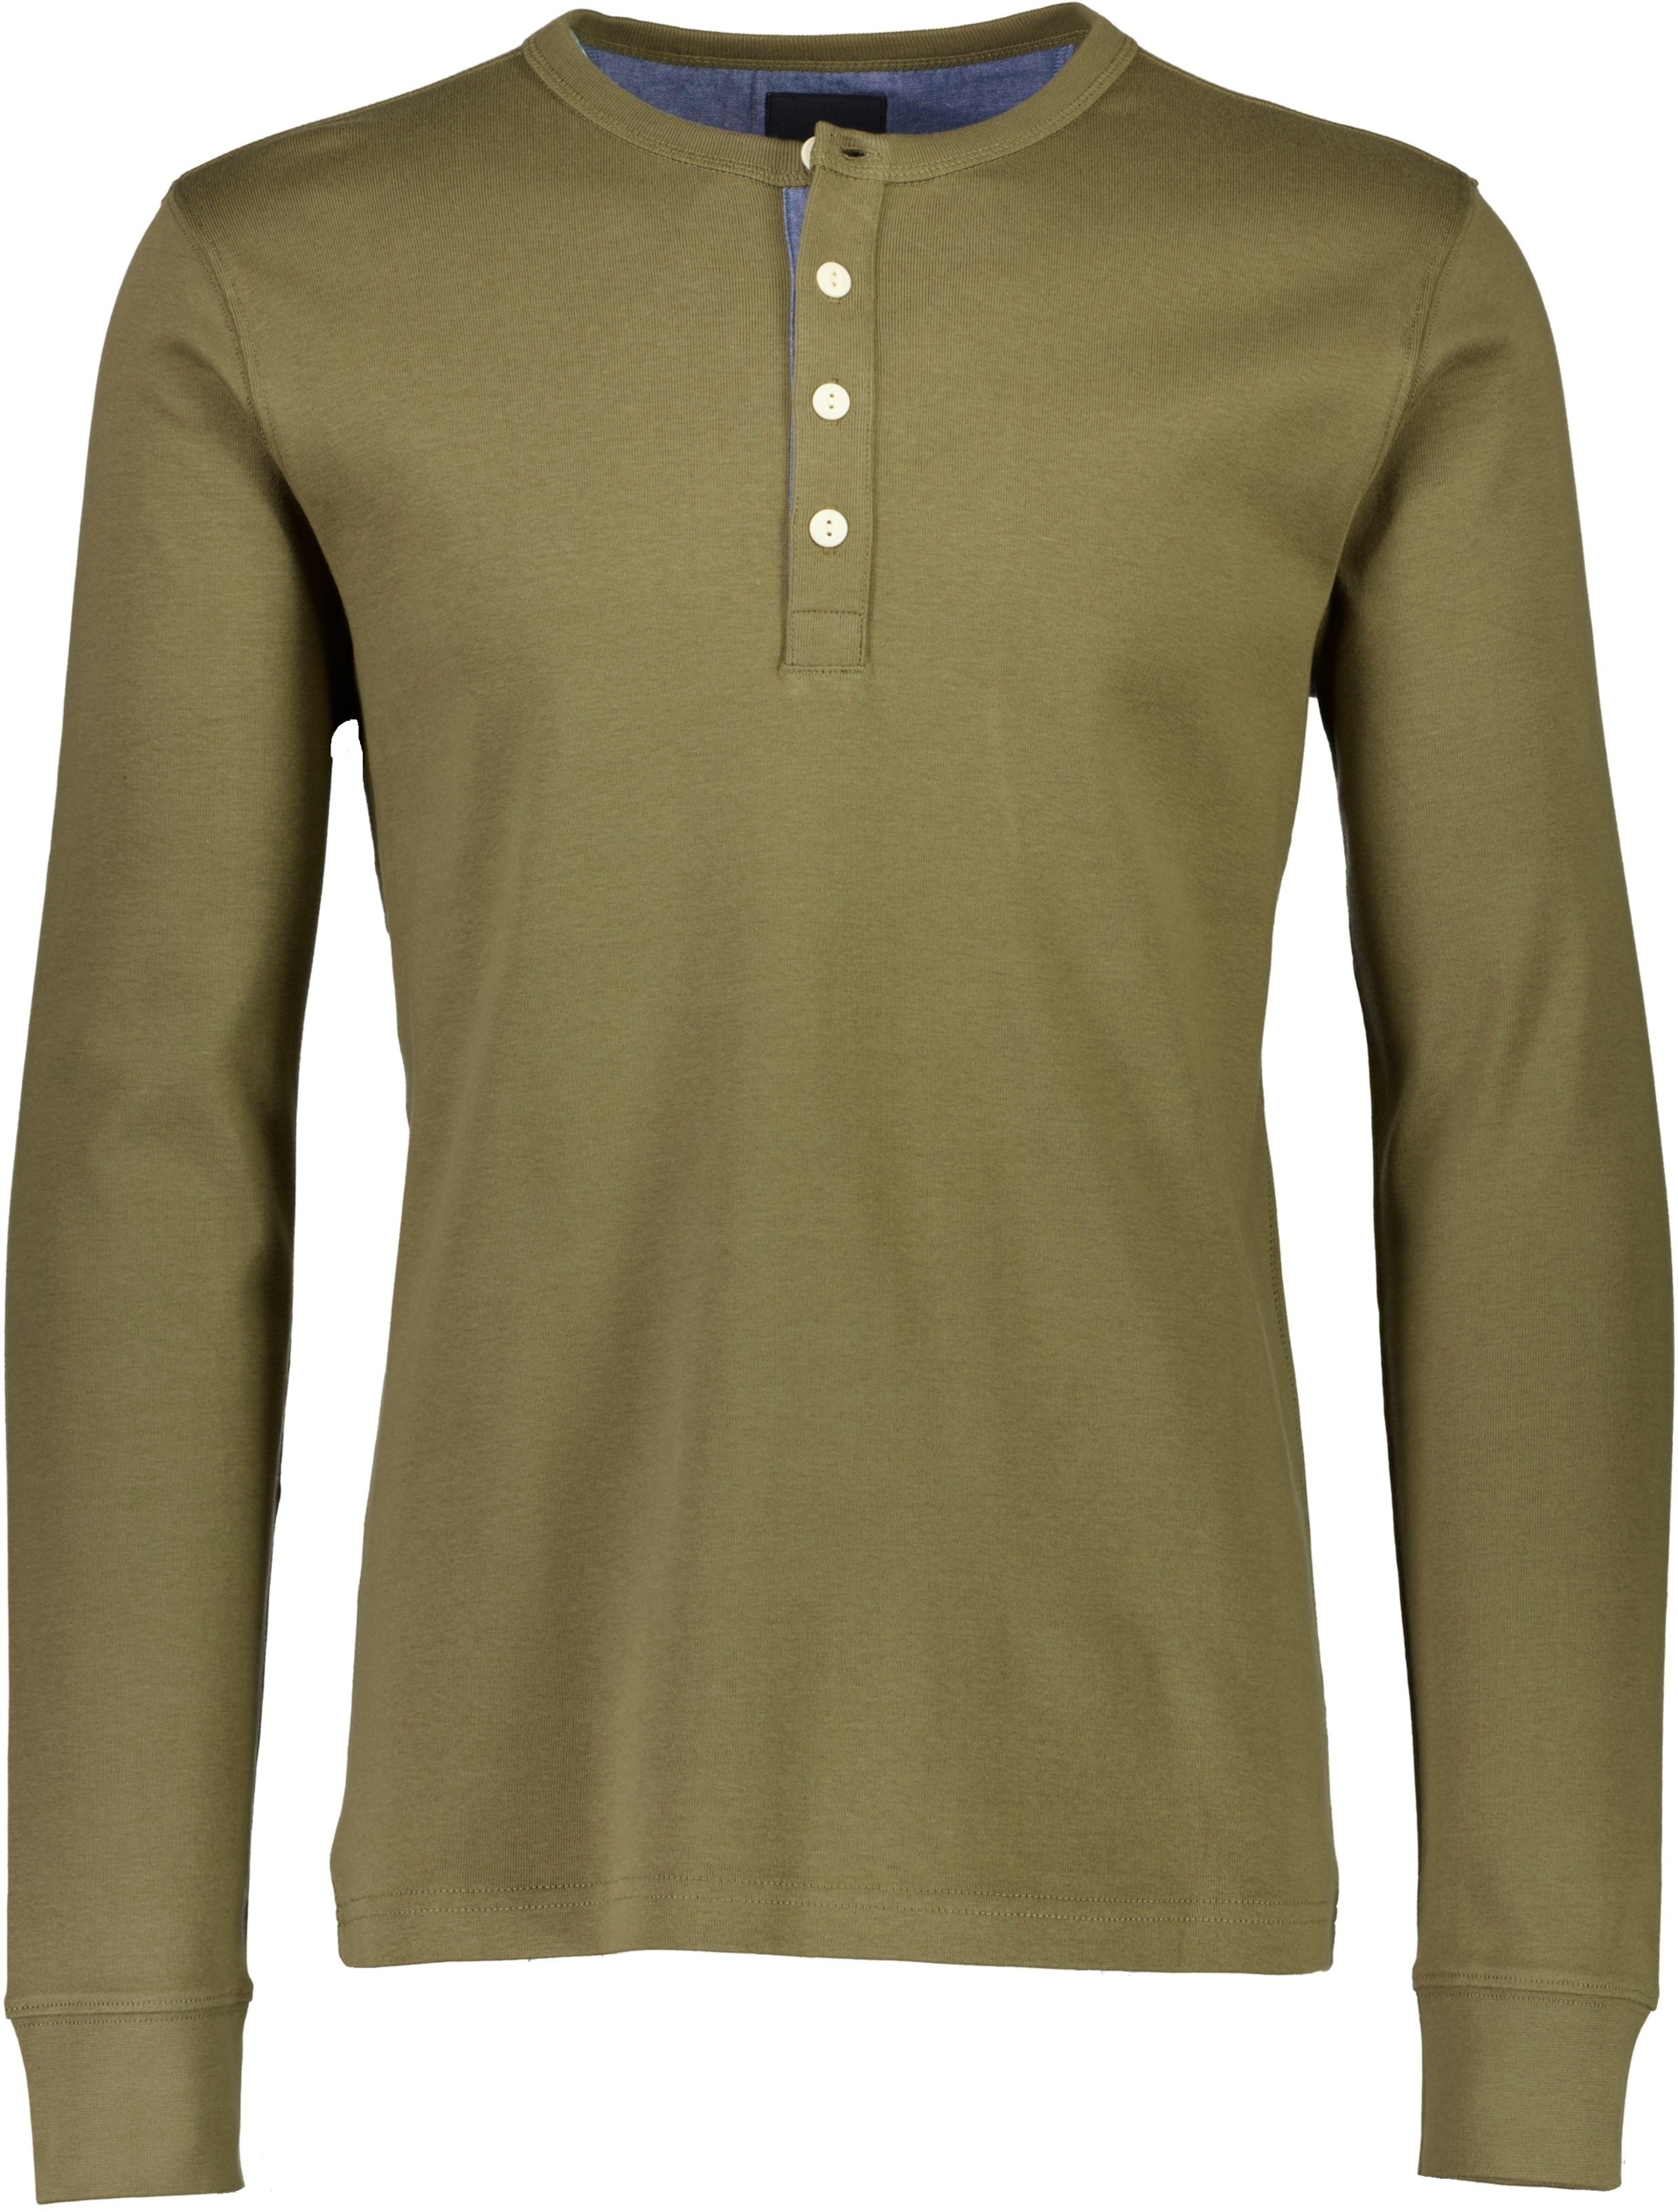 Lindbergh Henley shirt grön / army